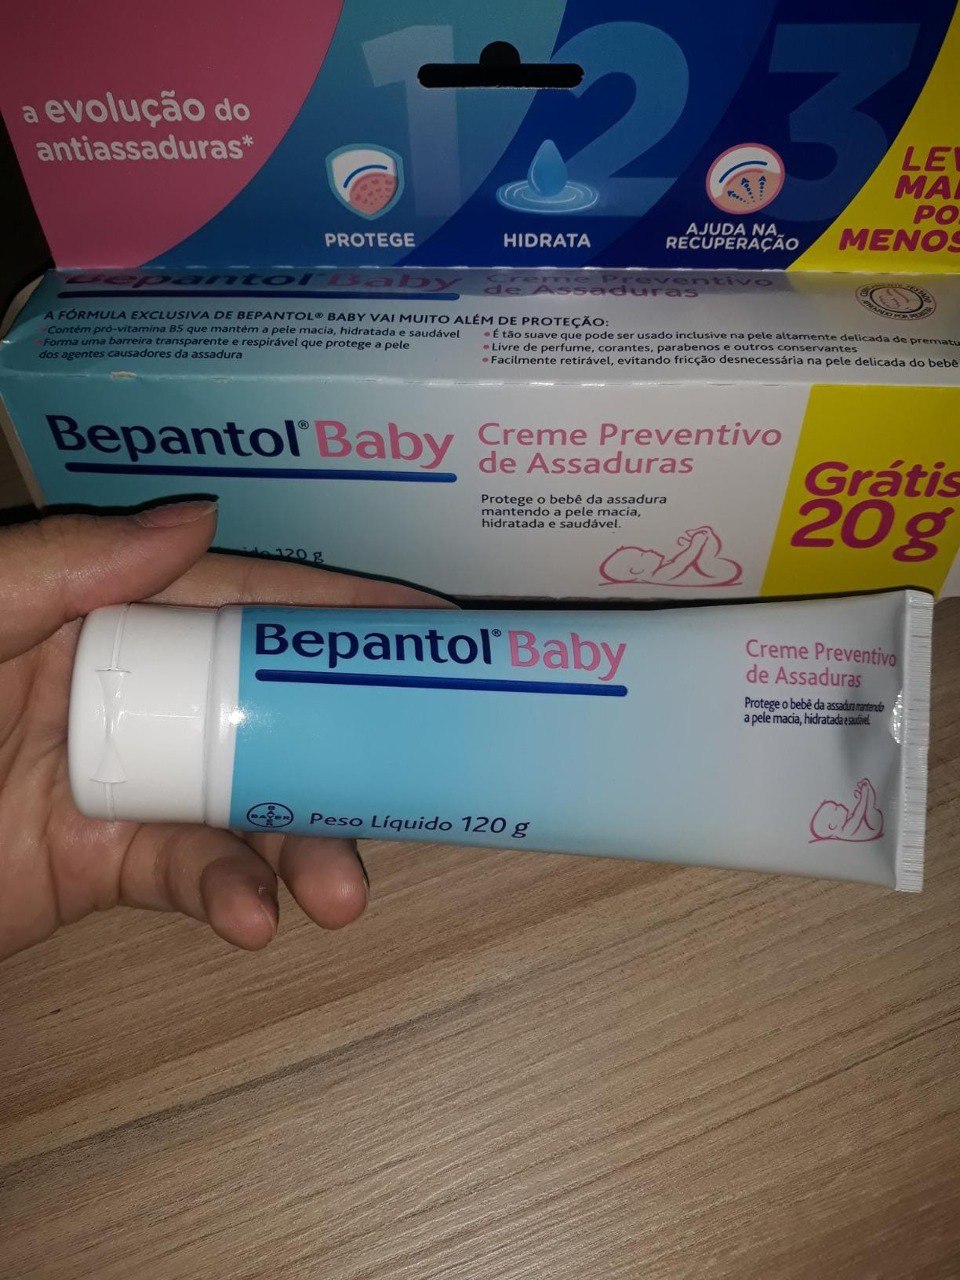 Bepantol Baby Creme Preventivo de Assaduras Para Bebês, Bepantol, 120G